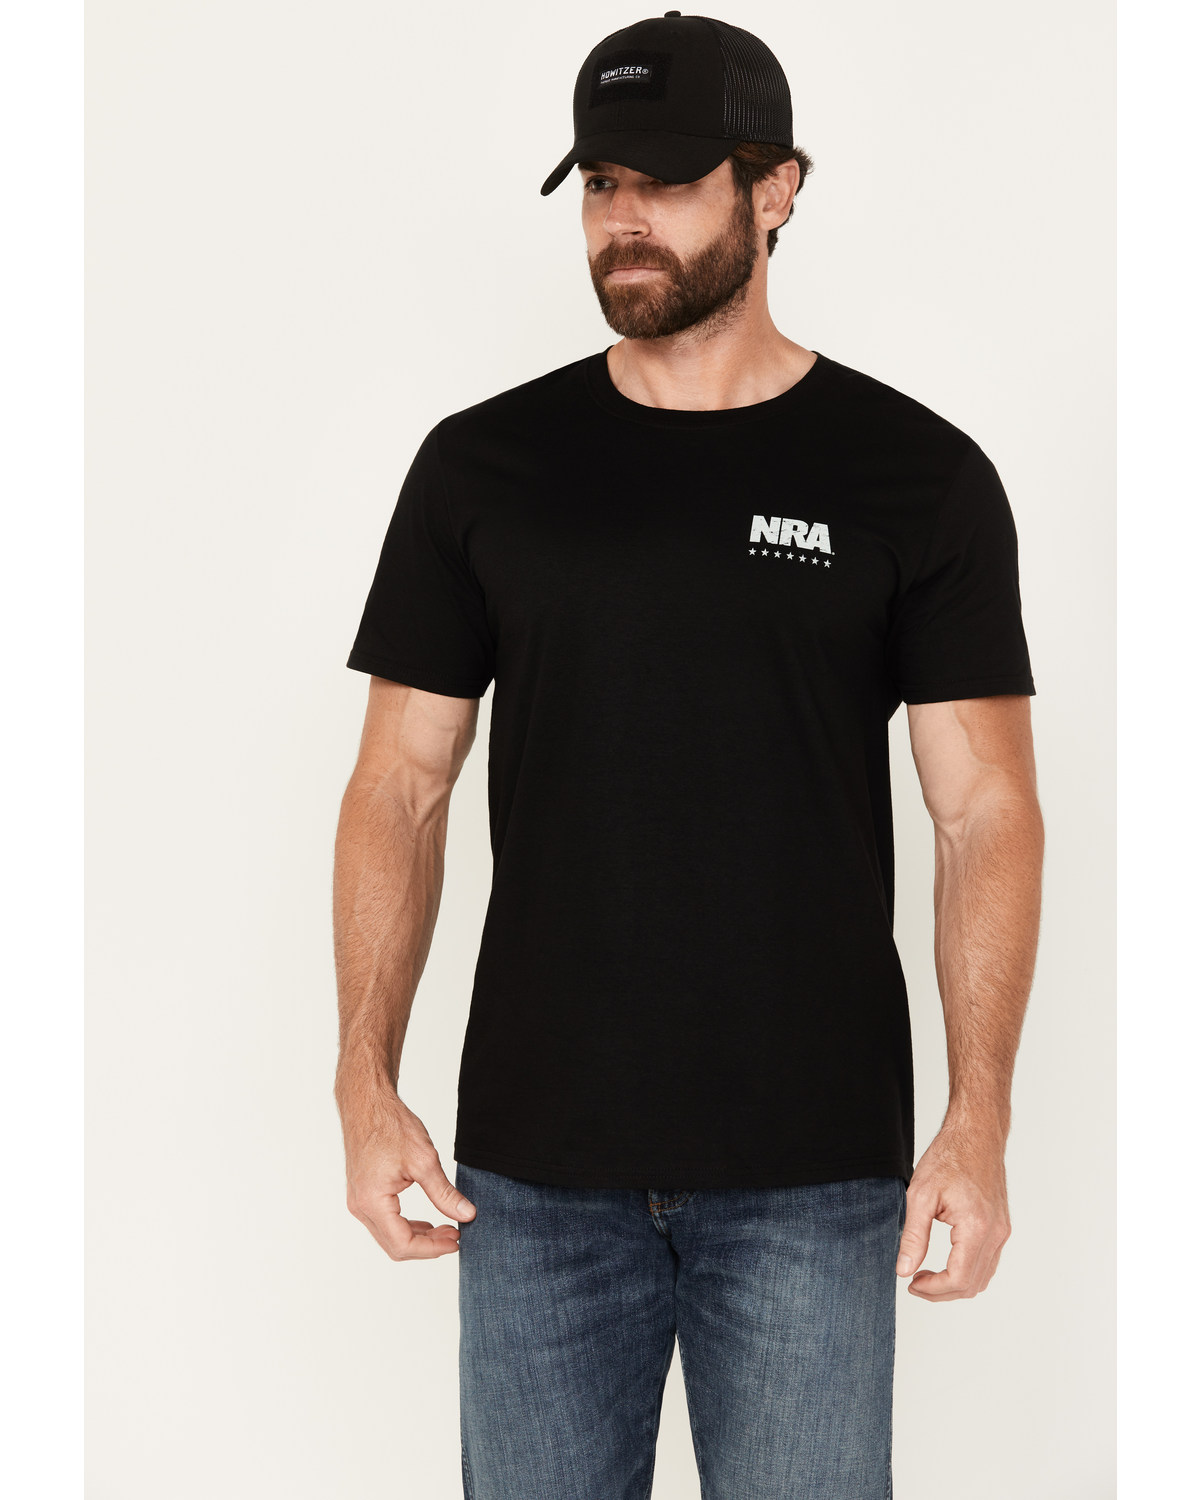 NRA Men's Vintage American Flag Short Sleeve Graphic T-Shirt